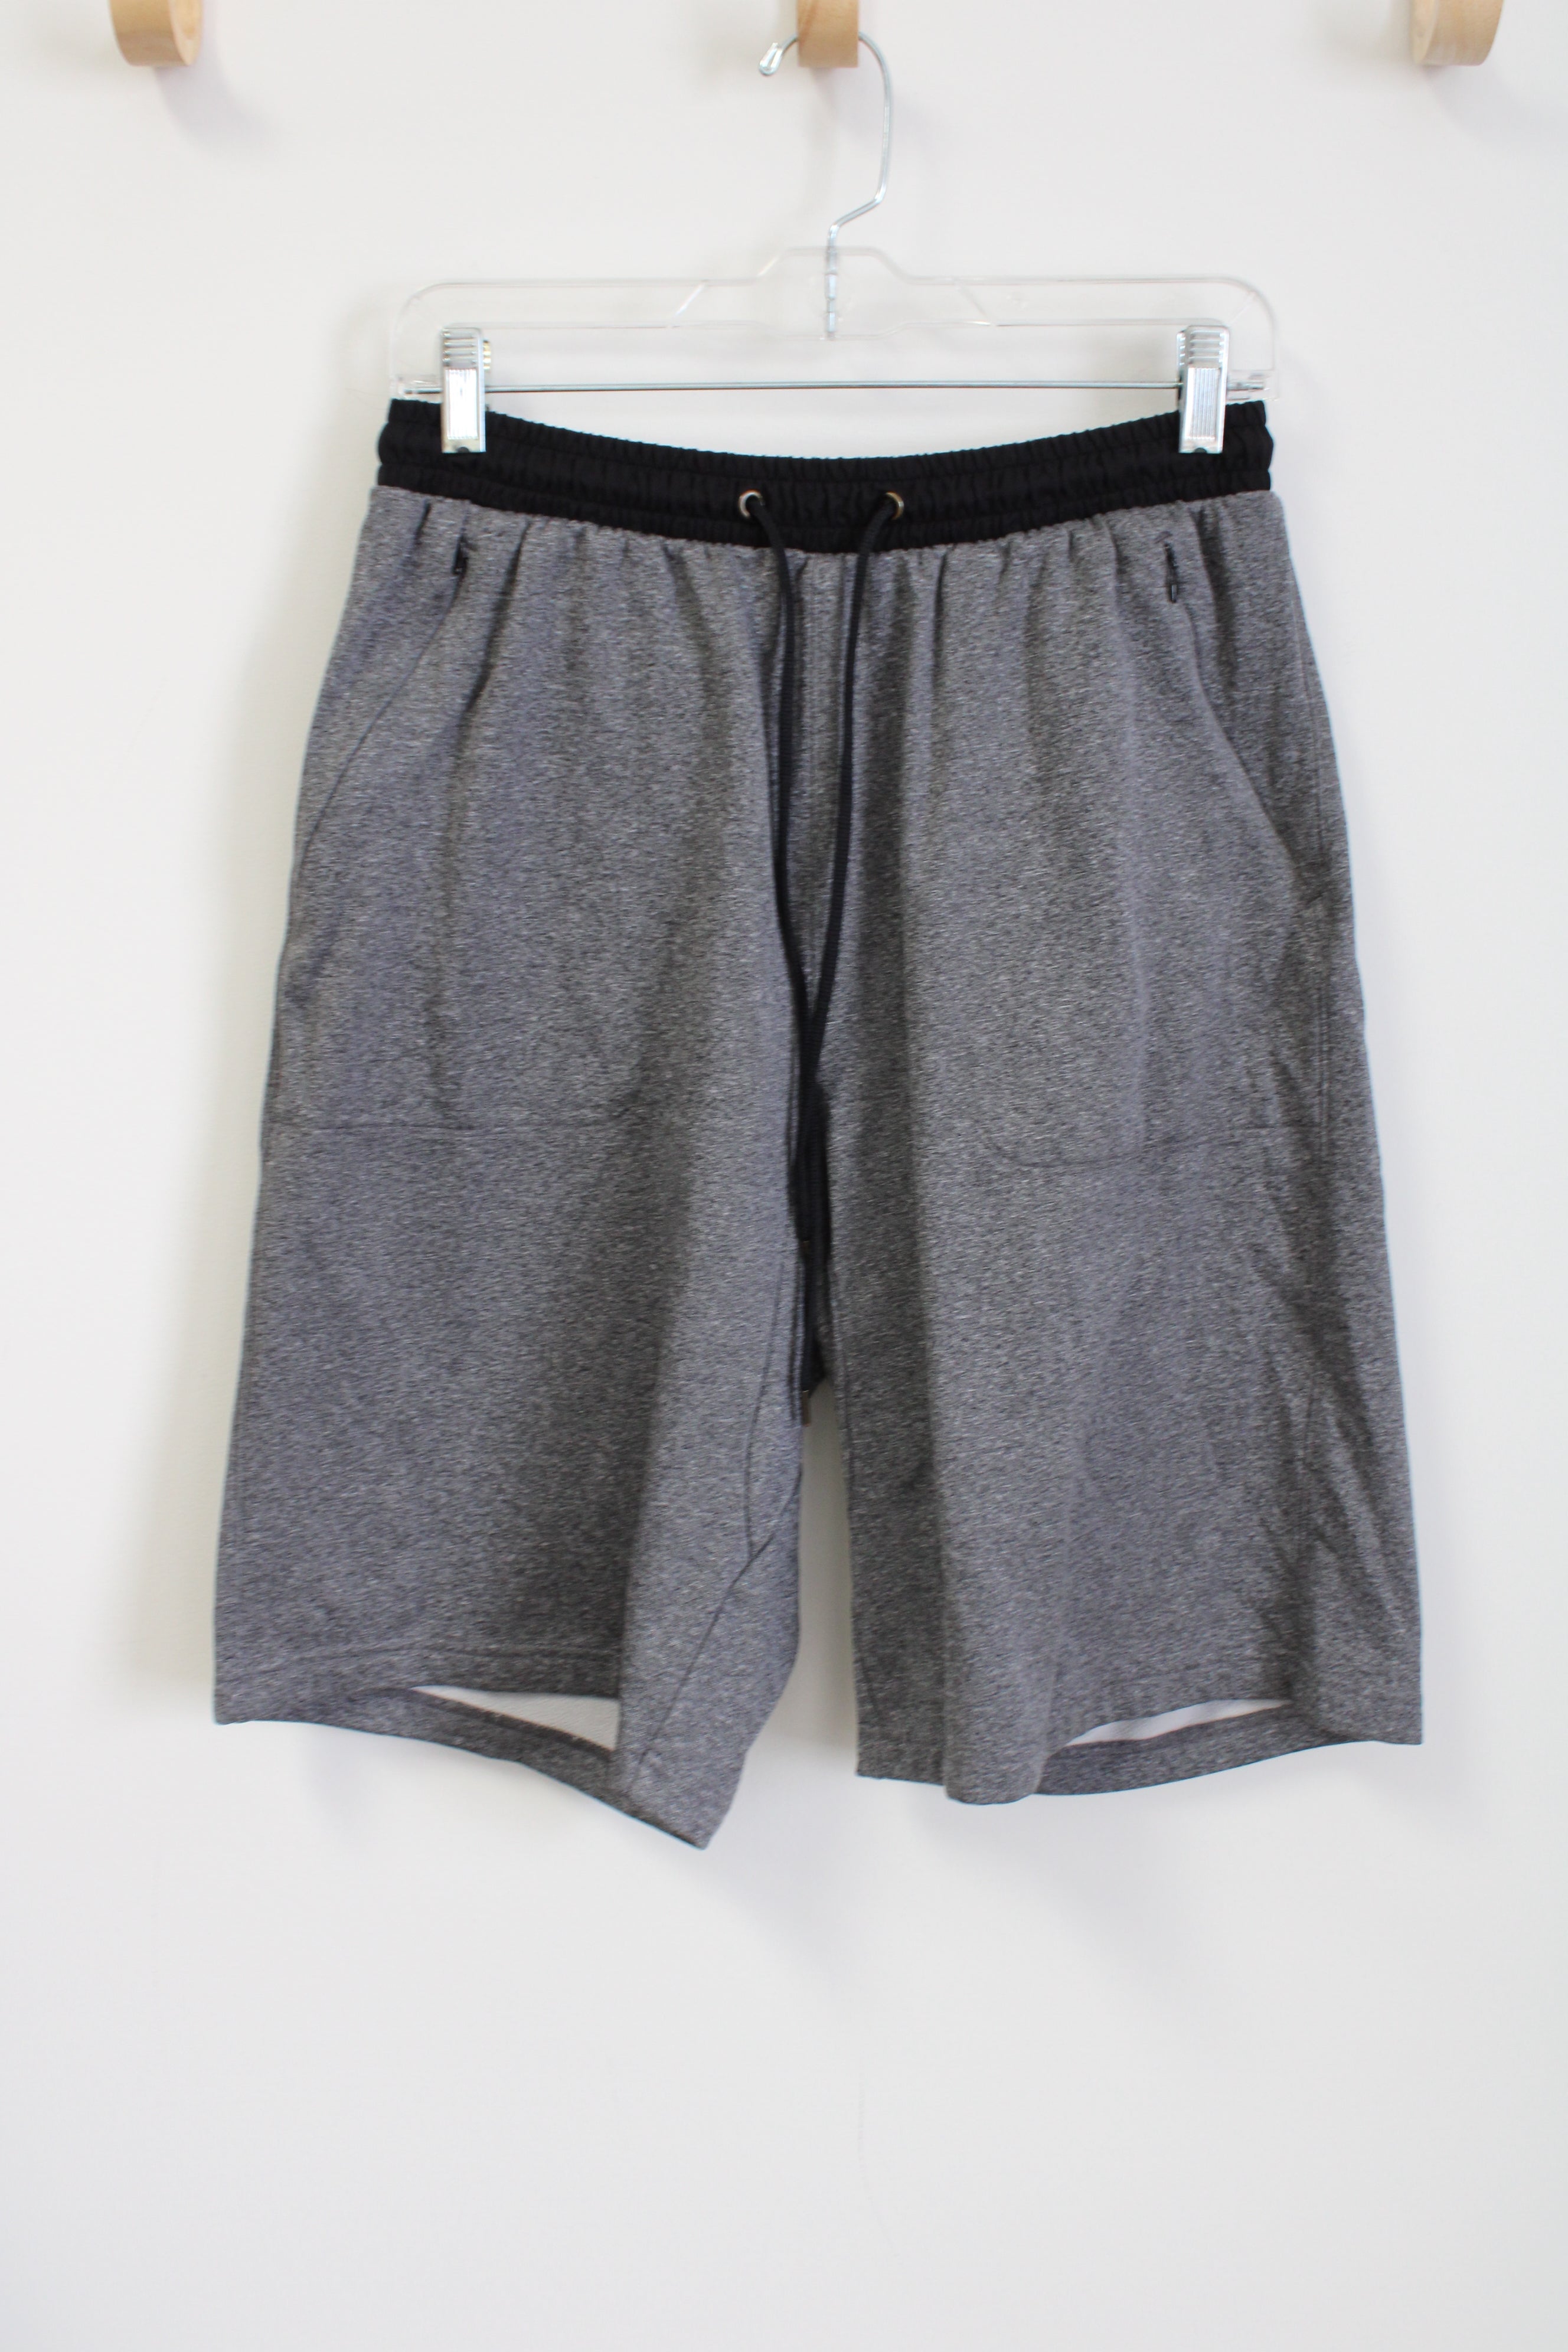 MSX Bu Michael Strahan Gray Fleece Lined Shorts | M